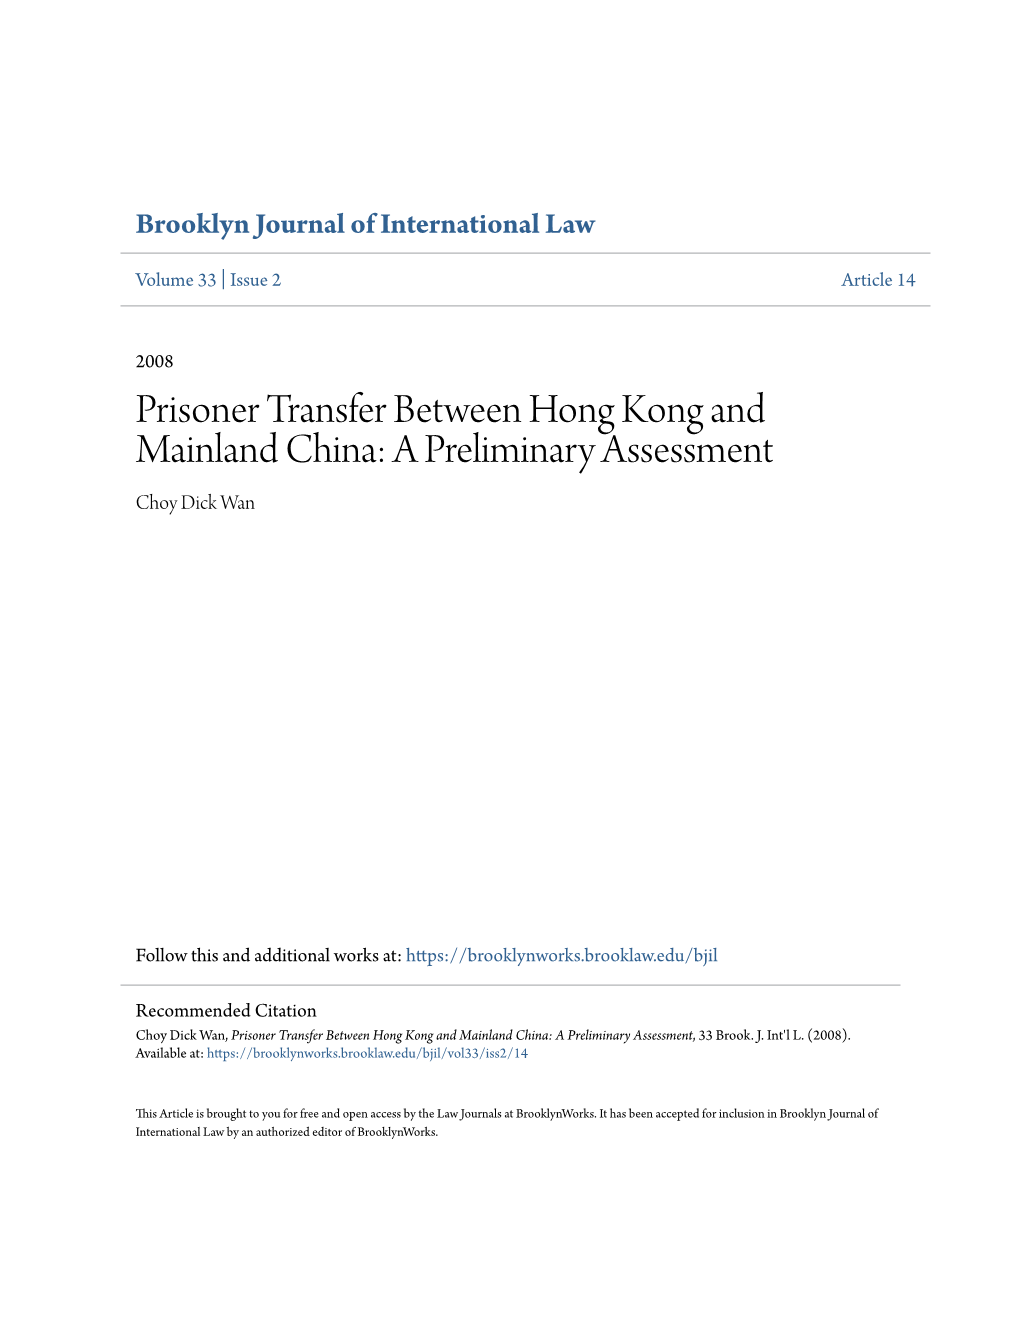 Prisoner Transfer Between Hong Kong and Mainland China: a Preliminary Assessment Choy Dick Wan